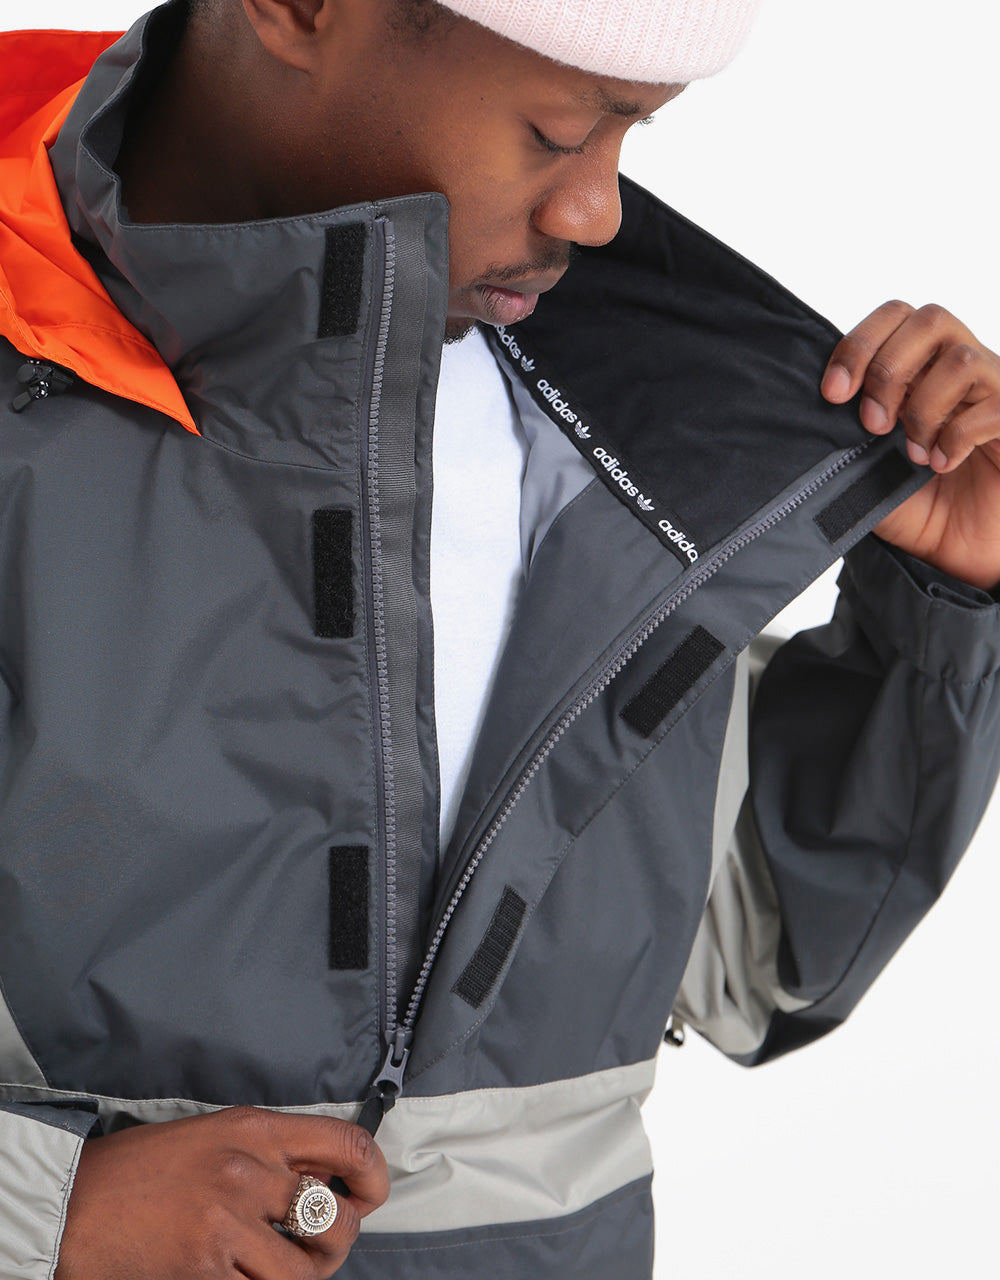 adidas Anorak Snowboard Jacket - Grey Six/Feather Grey/Signal Orange